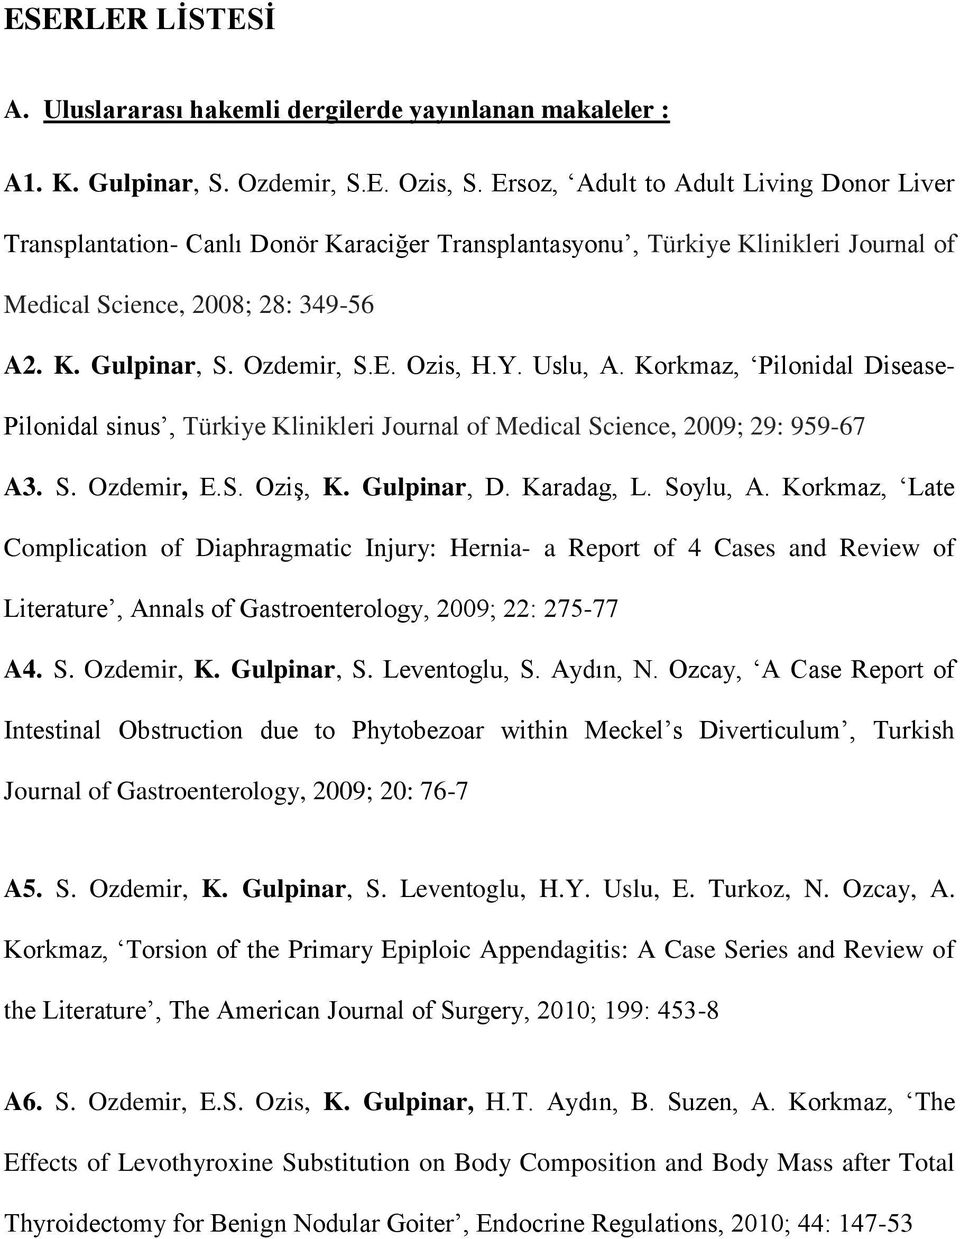 Y. Uslu, A. Korkmaz, Pilonidal Disease- Pilonidal sinus, Türkiye Klinikleri Journal of Medical Science, 2009; 29: 959-67 A3. S. Ozdemir, E.S. Oziş, K. Gulpinar, D. Karadag, L. Soylu, A.